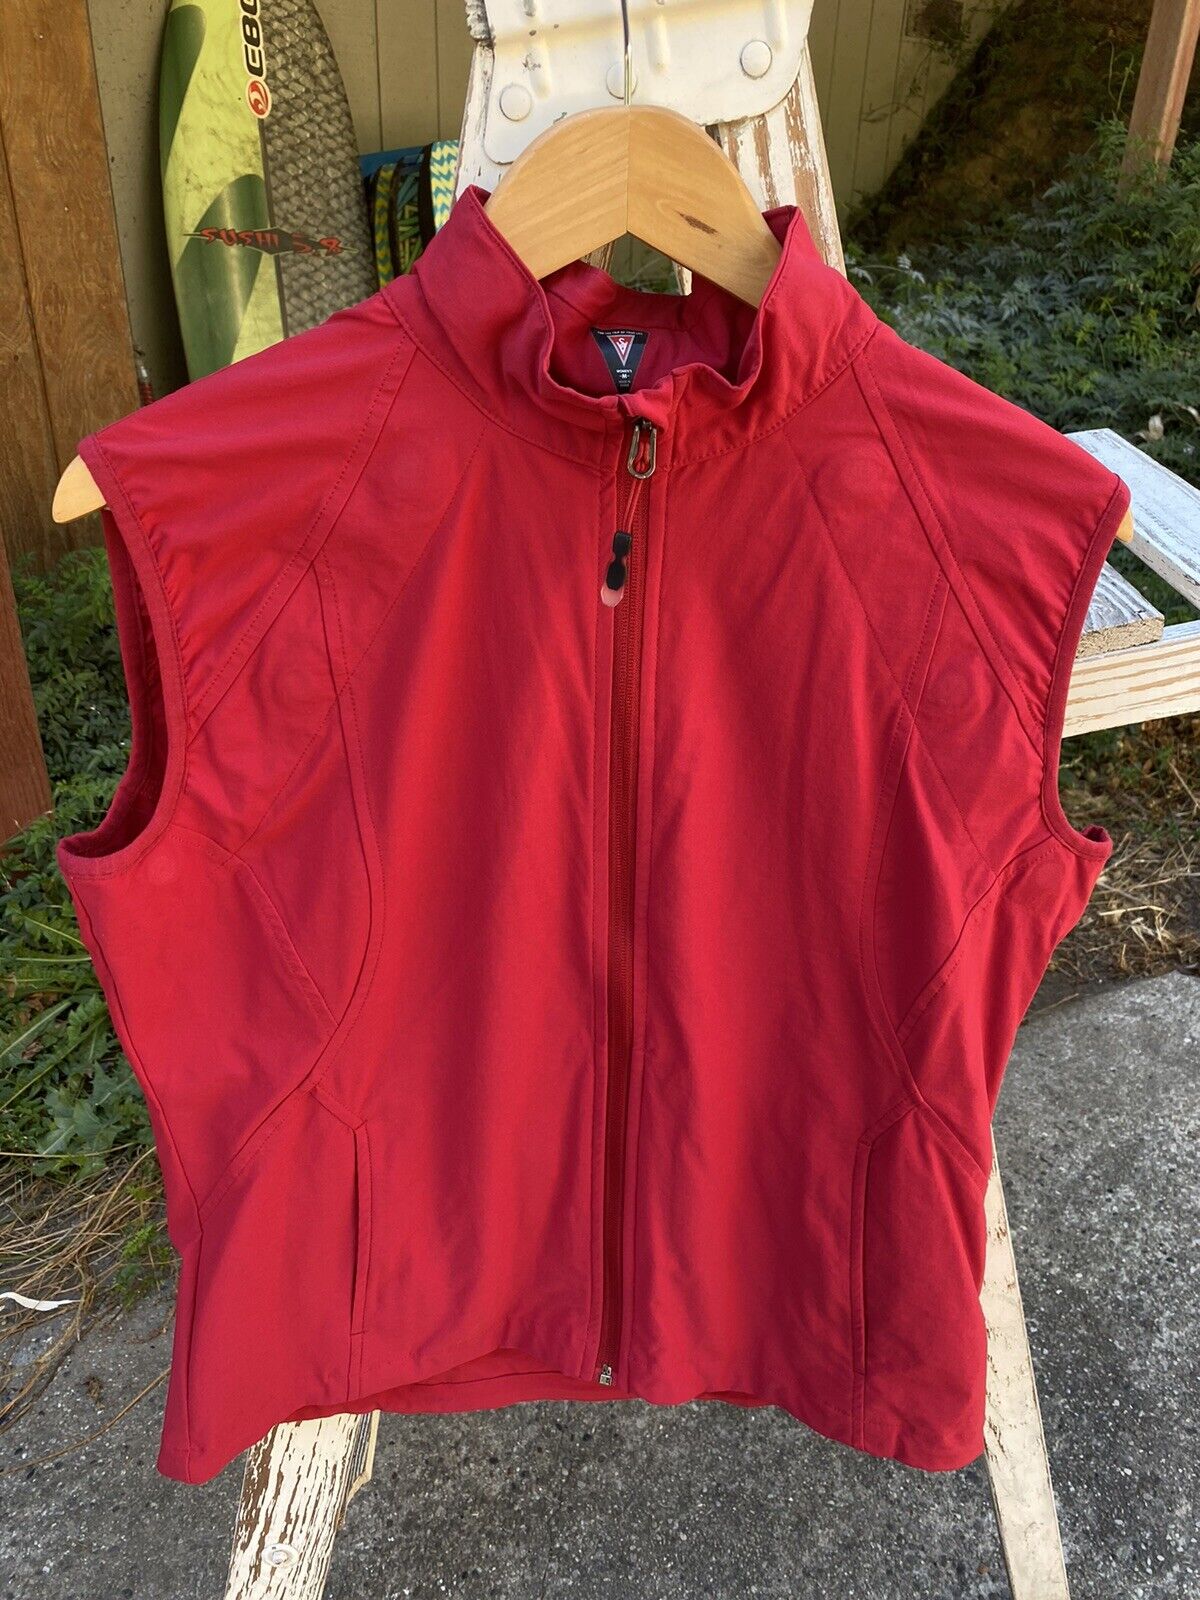 Womens Scottevest Jacket Magnetic Removable Sleev… - image 6